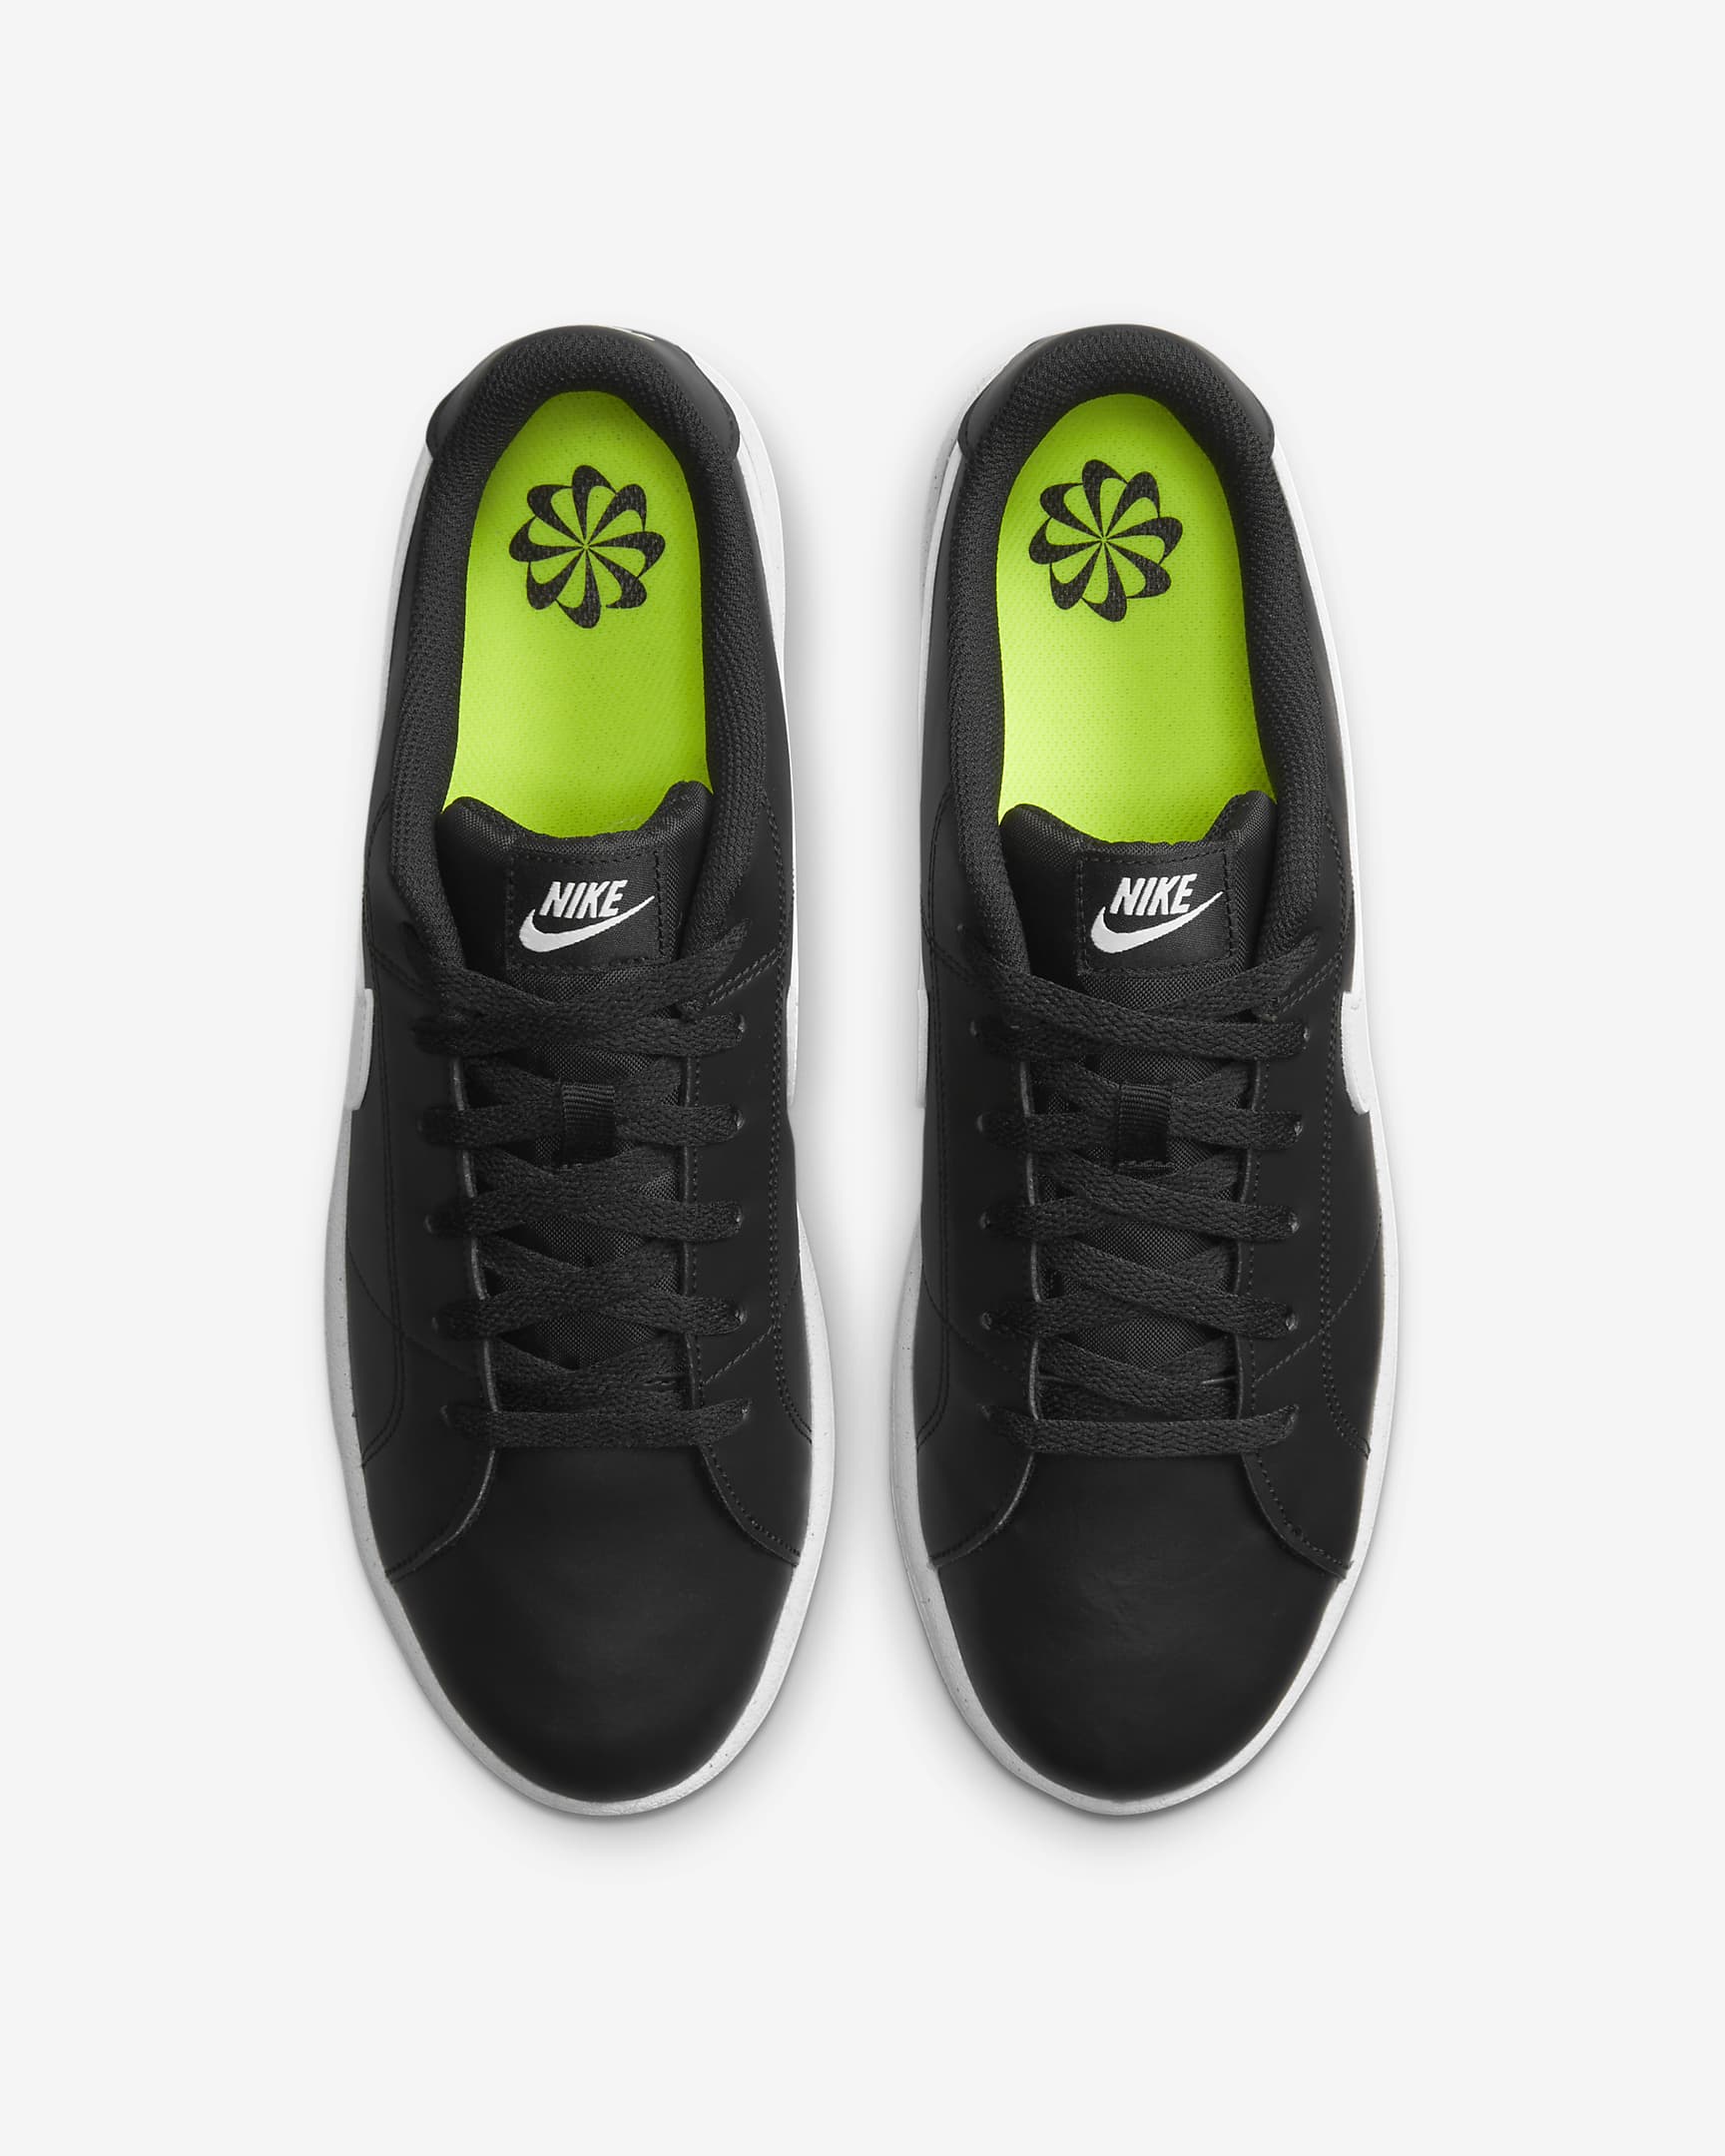 NikeCourt Royale 2 Next Nature Men's Shoes - Black/White